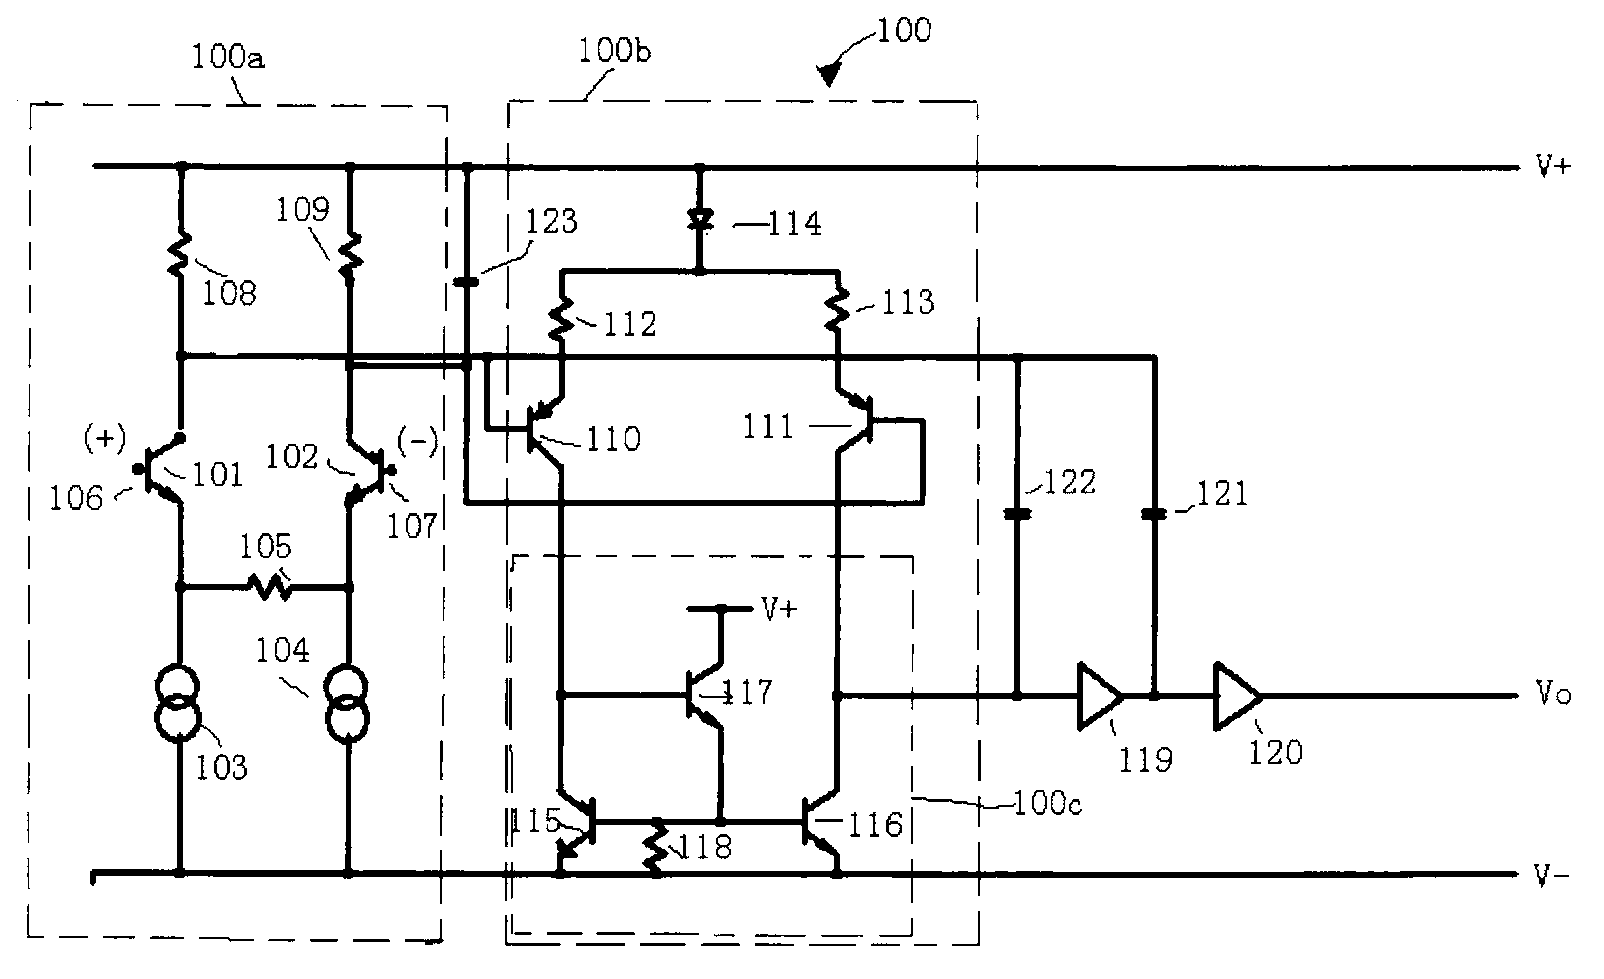 High-gain level switching circuit